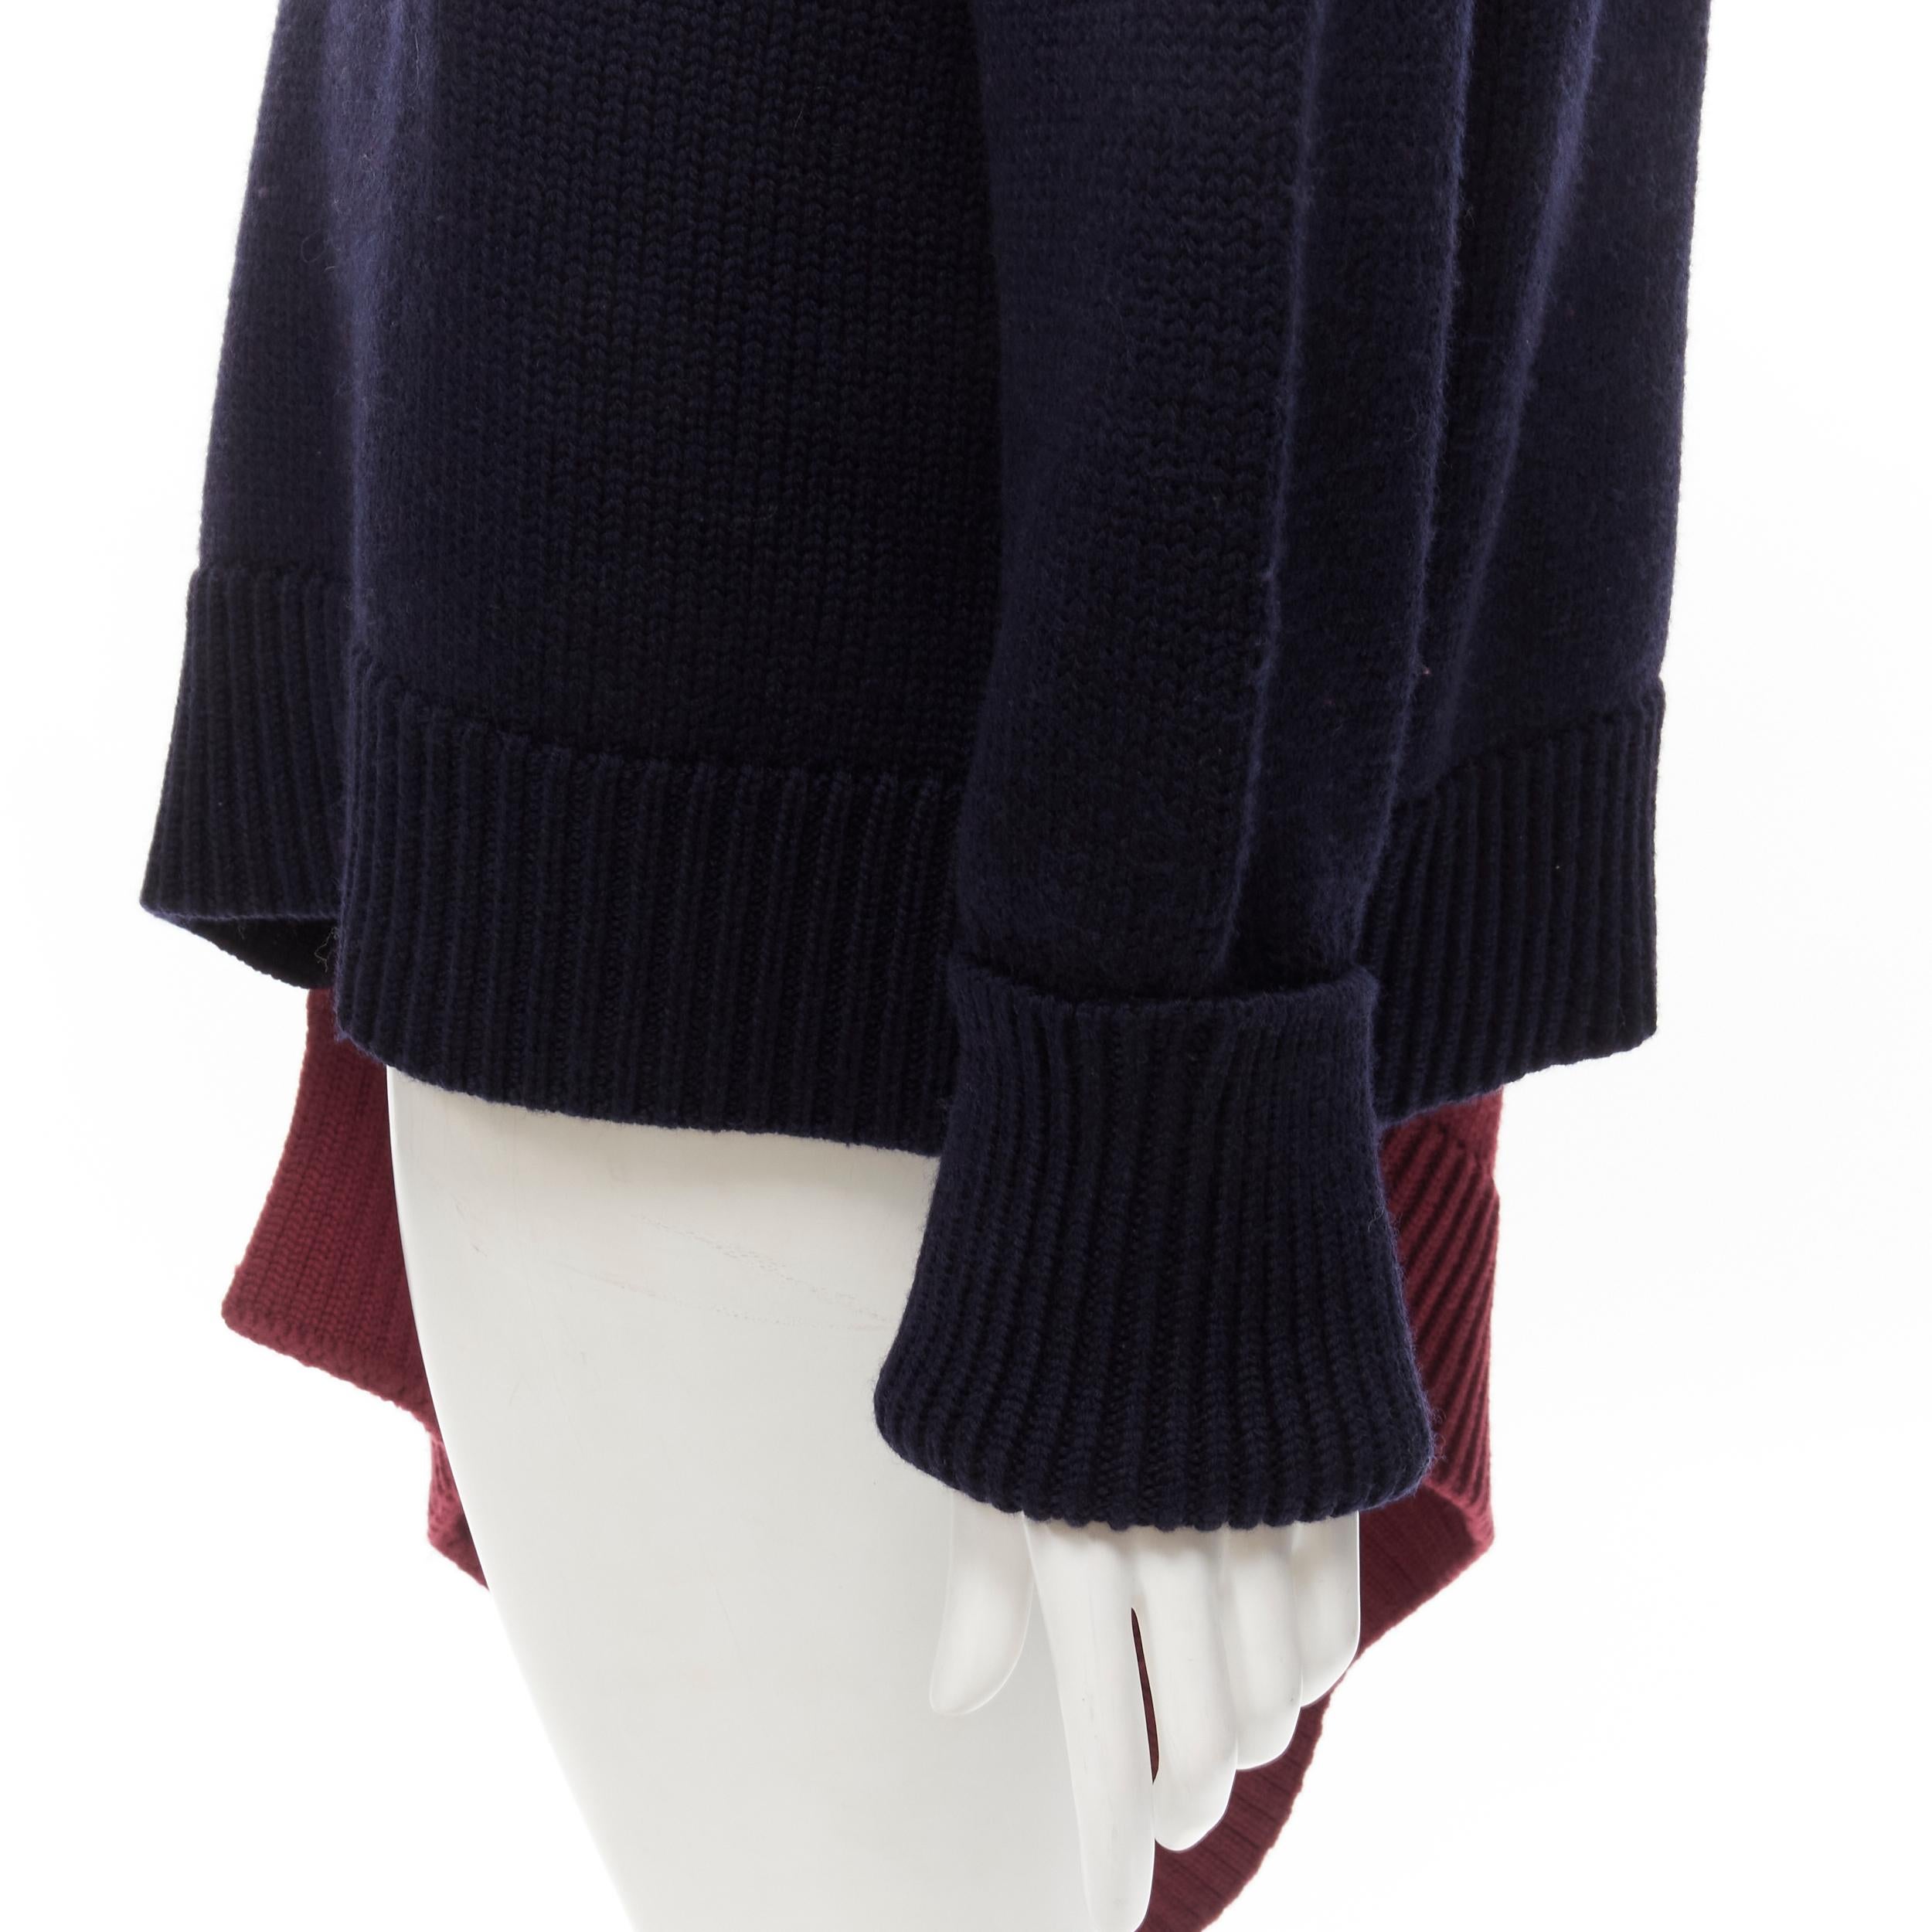 new MONSE 100% extra fine merino wool navy burgundy bias sweater cape pocho XS 2